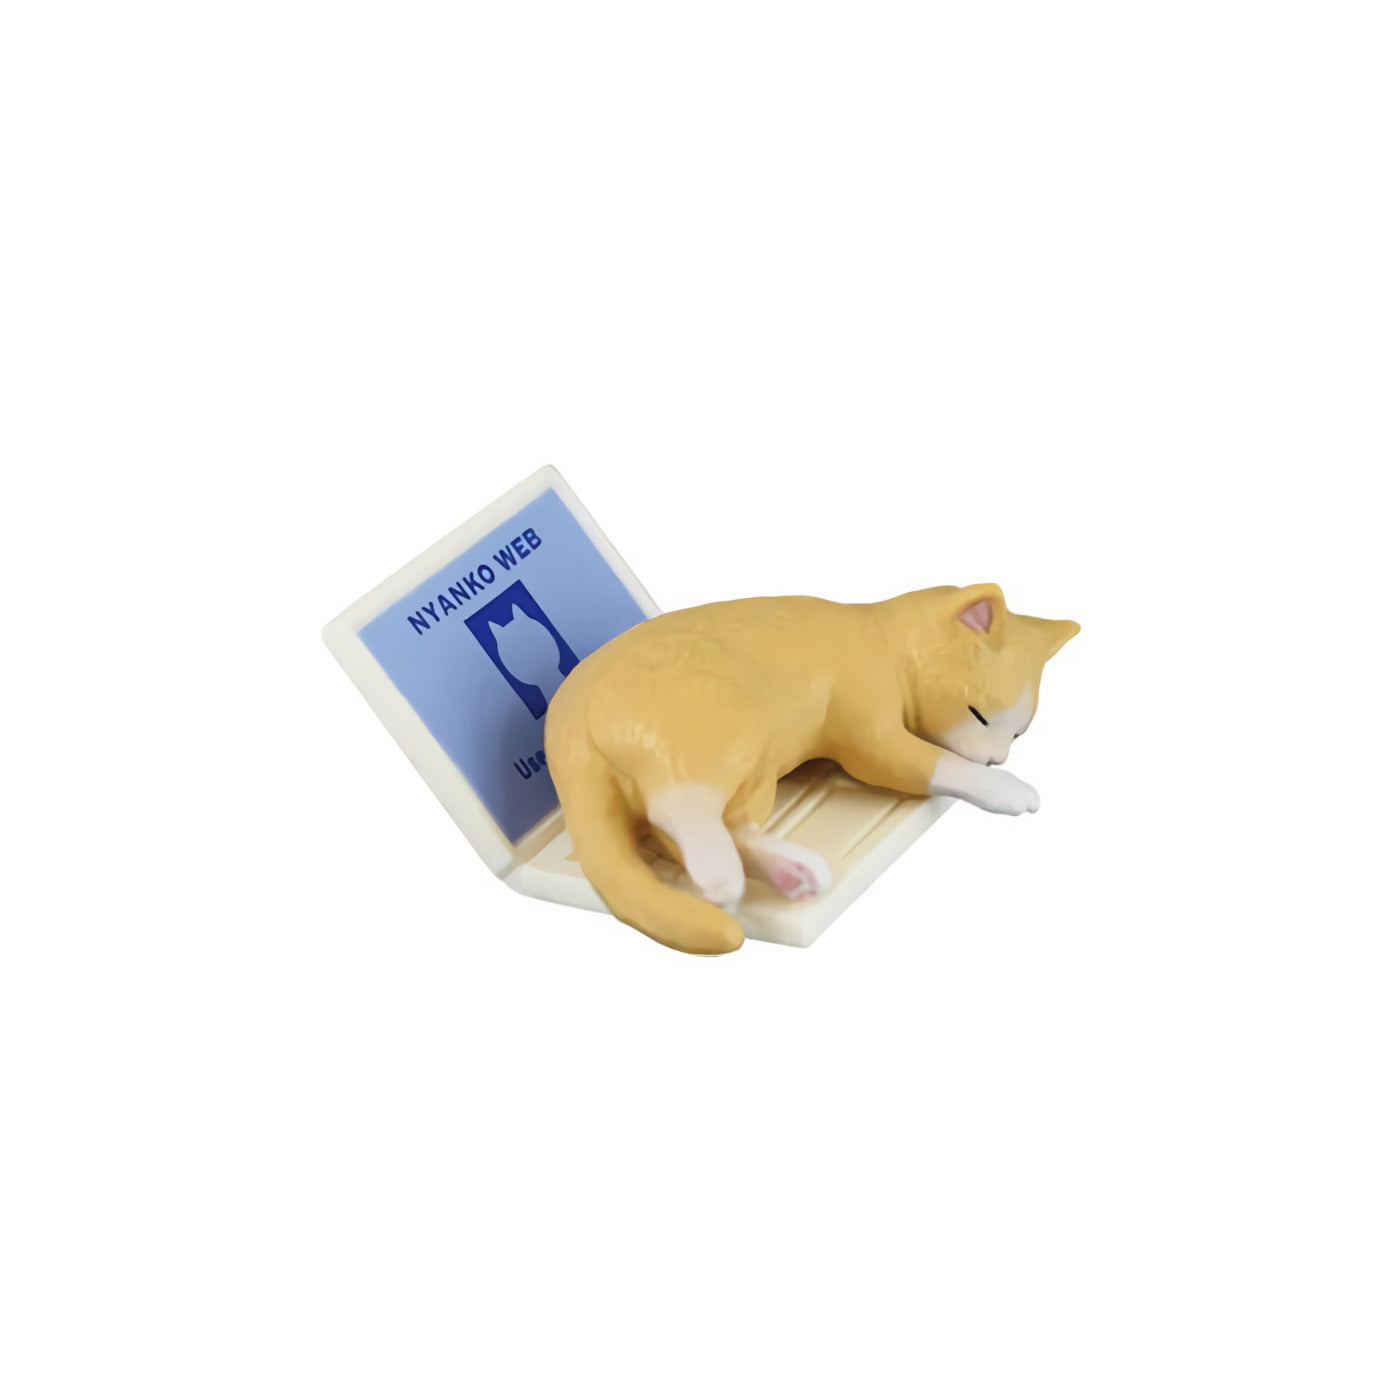 Shoo Cat Please Move! Ginger Cat with Socks on Laptop Mini Figure